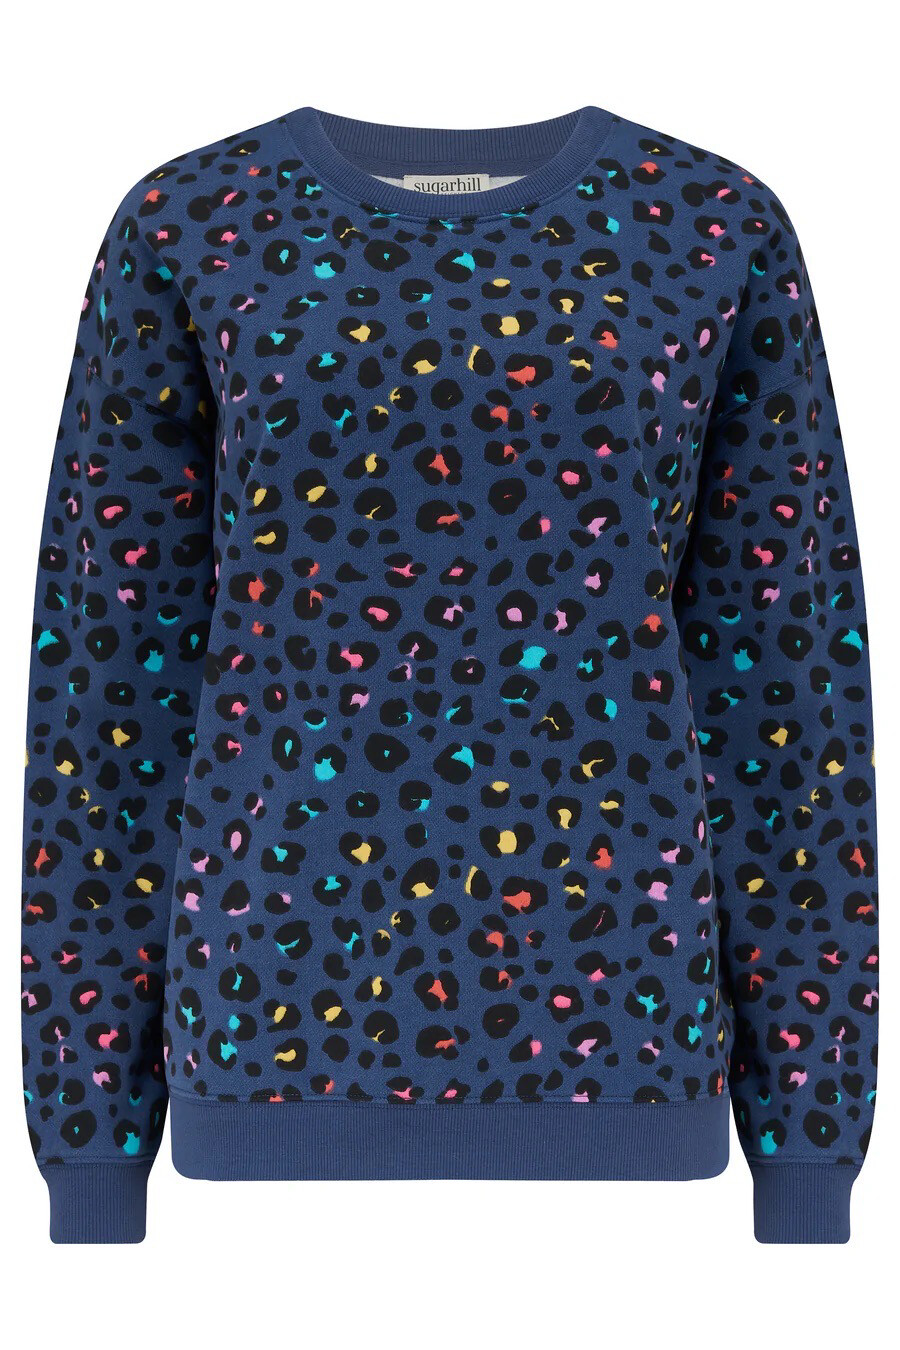 Sugarhill Navy Rainbow Leopard Sweatshirt